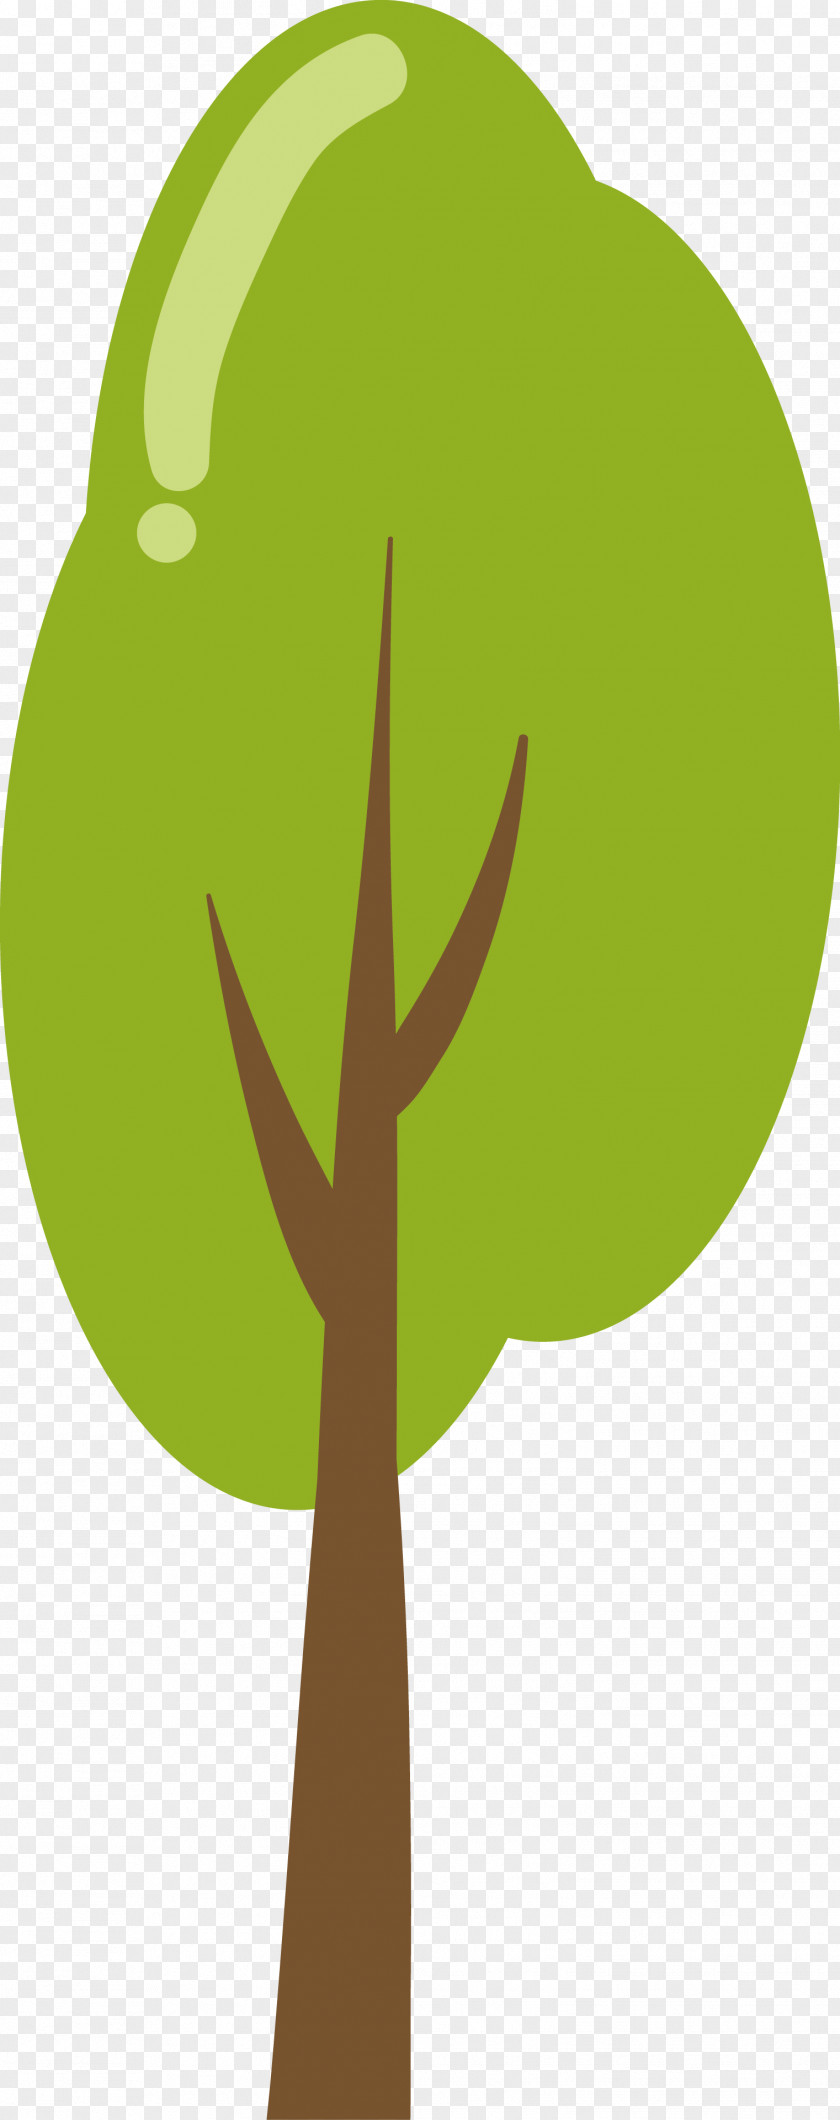 Cartoon Green Tree Diagram PNG